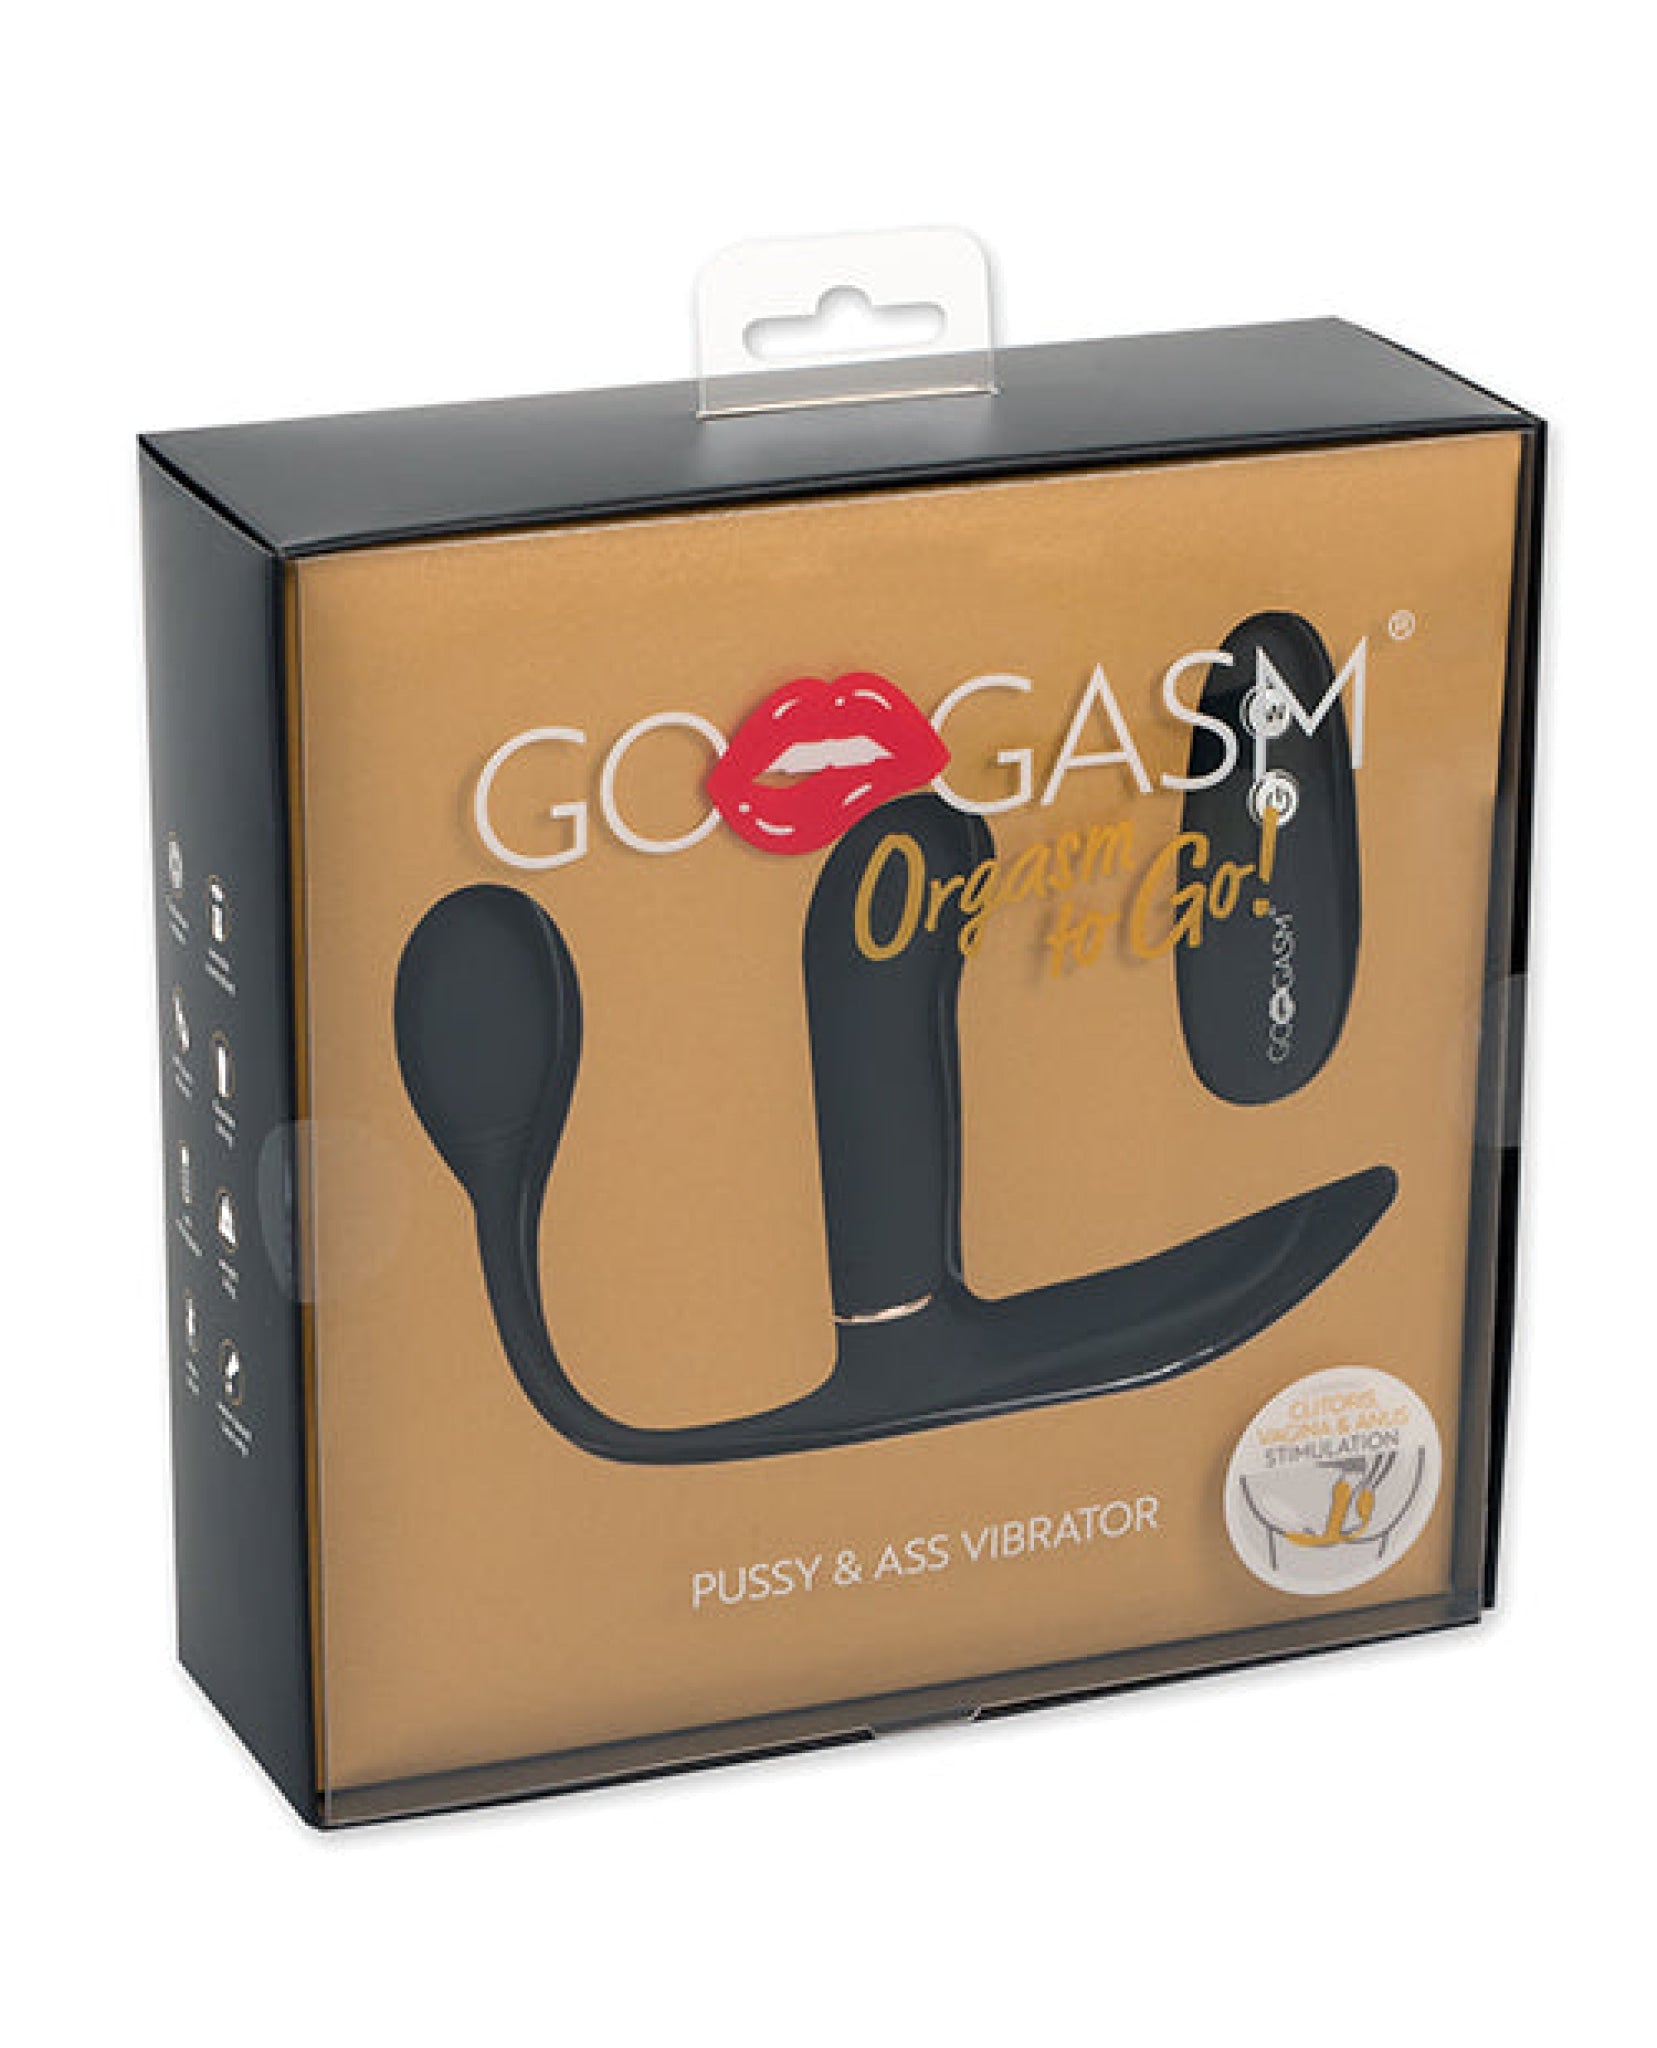 Gogasm Pussy & Ass Vibrator - Black Gogasm